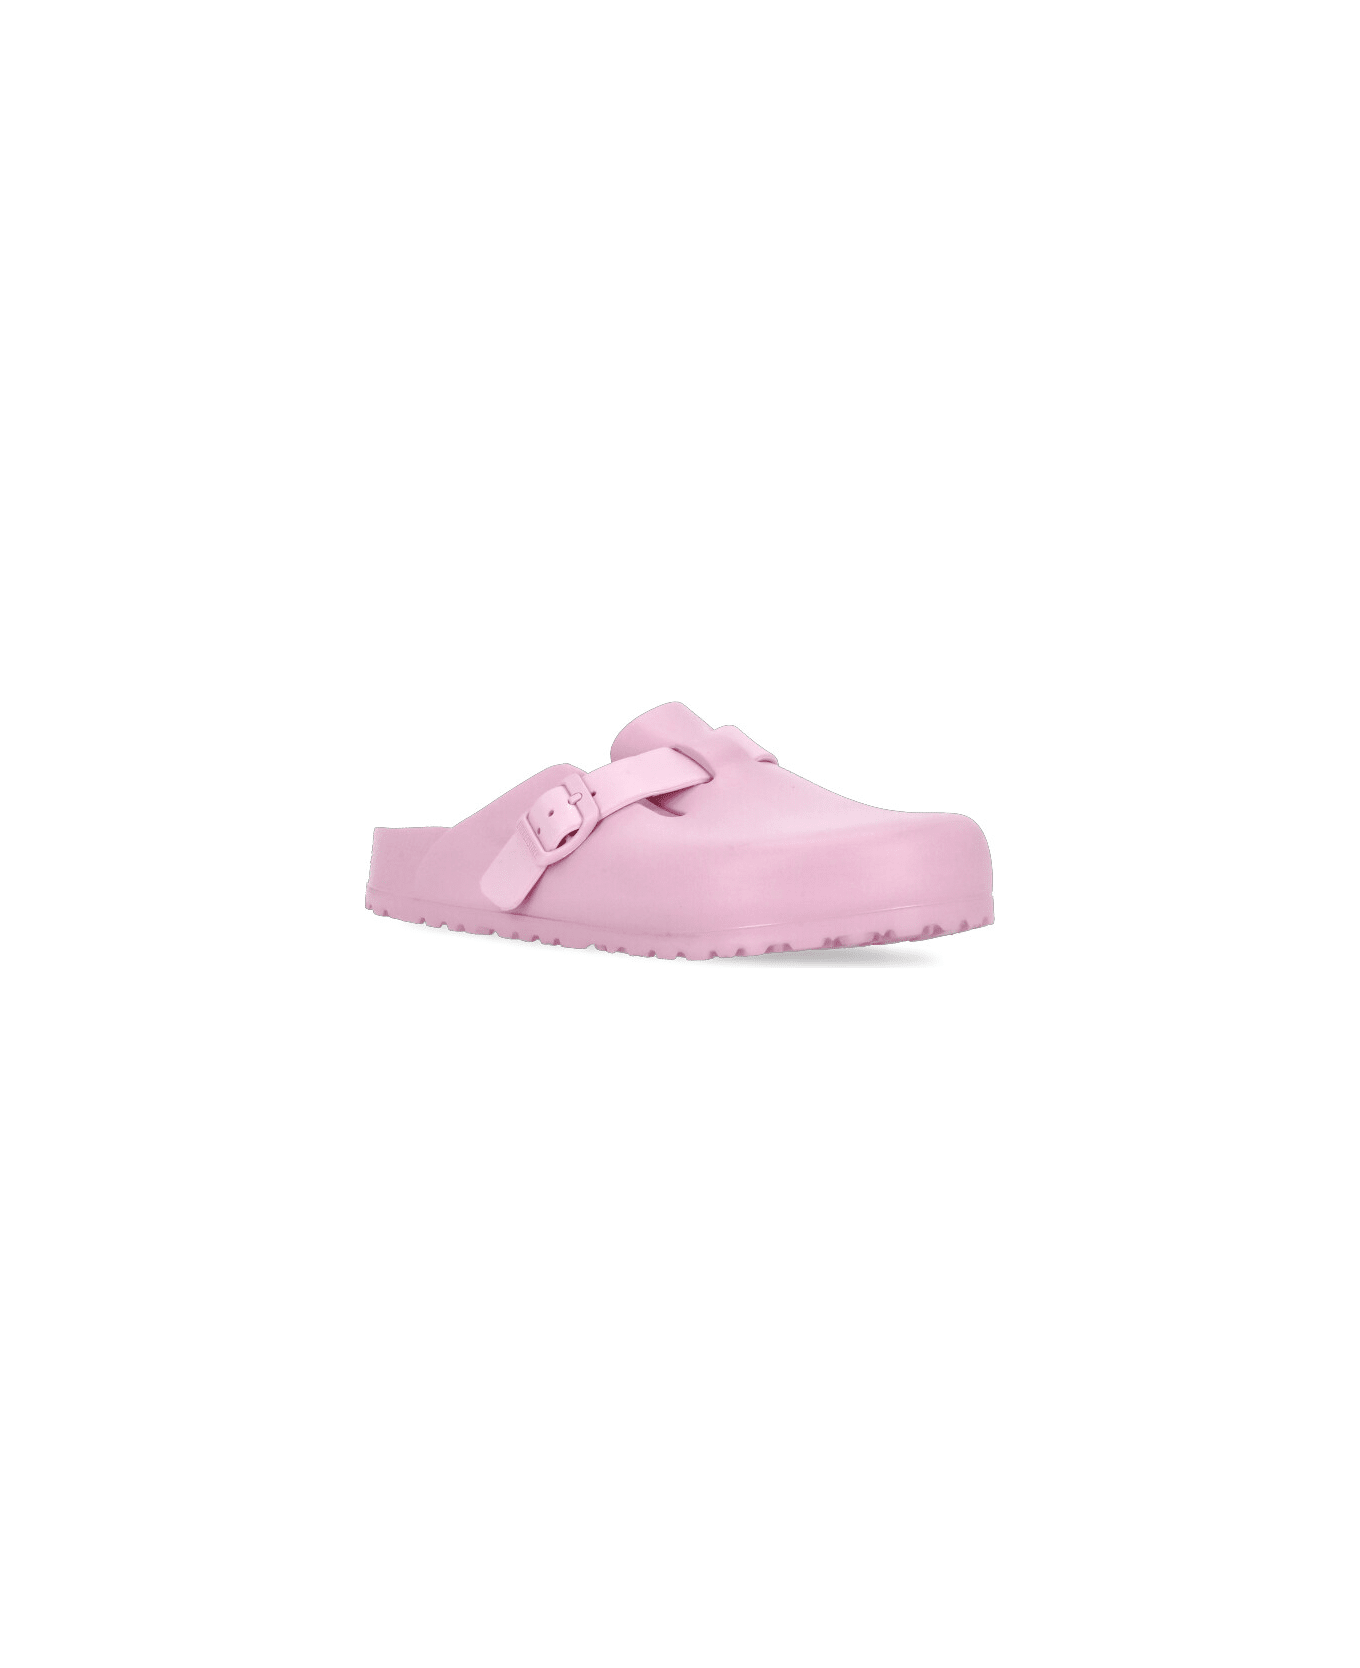 Birkenstock Boston Slippers - Pink サンダル